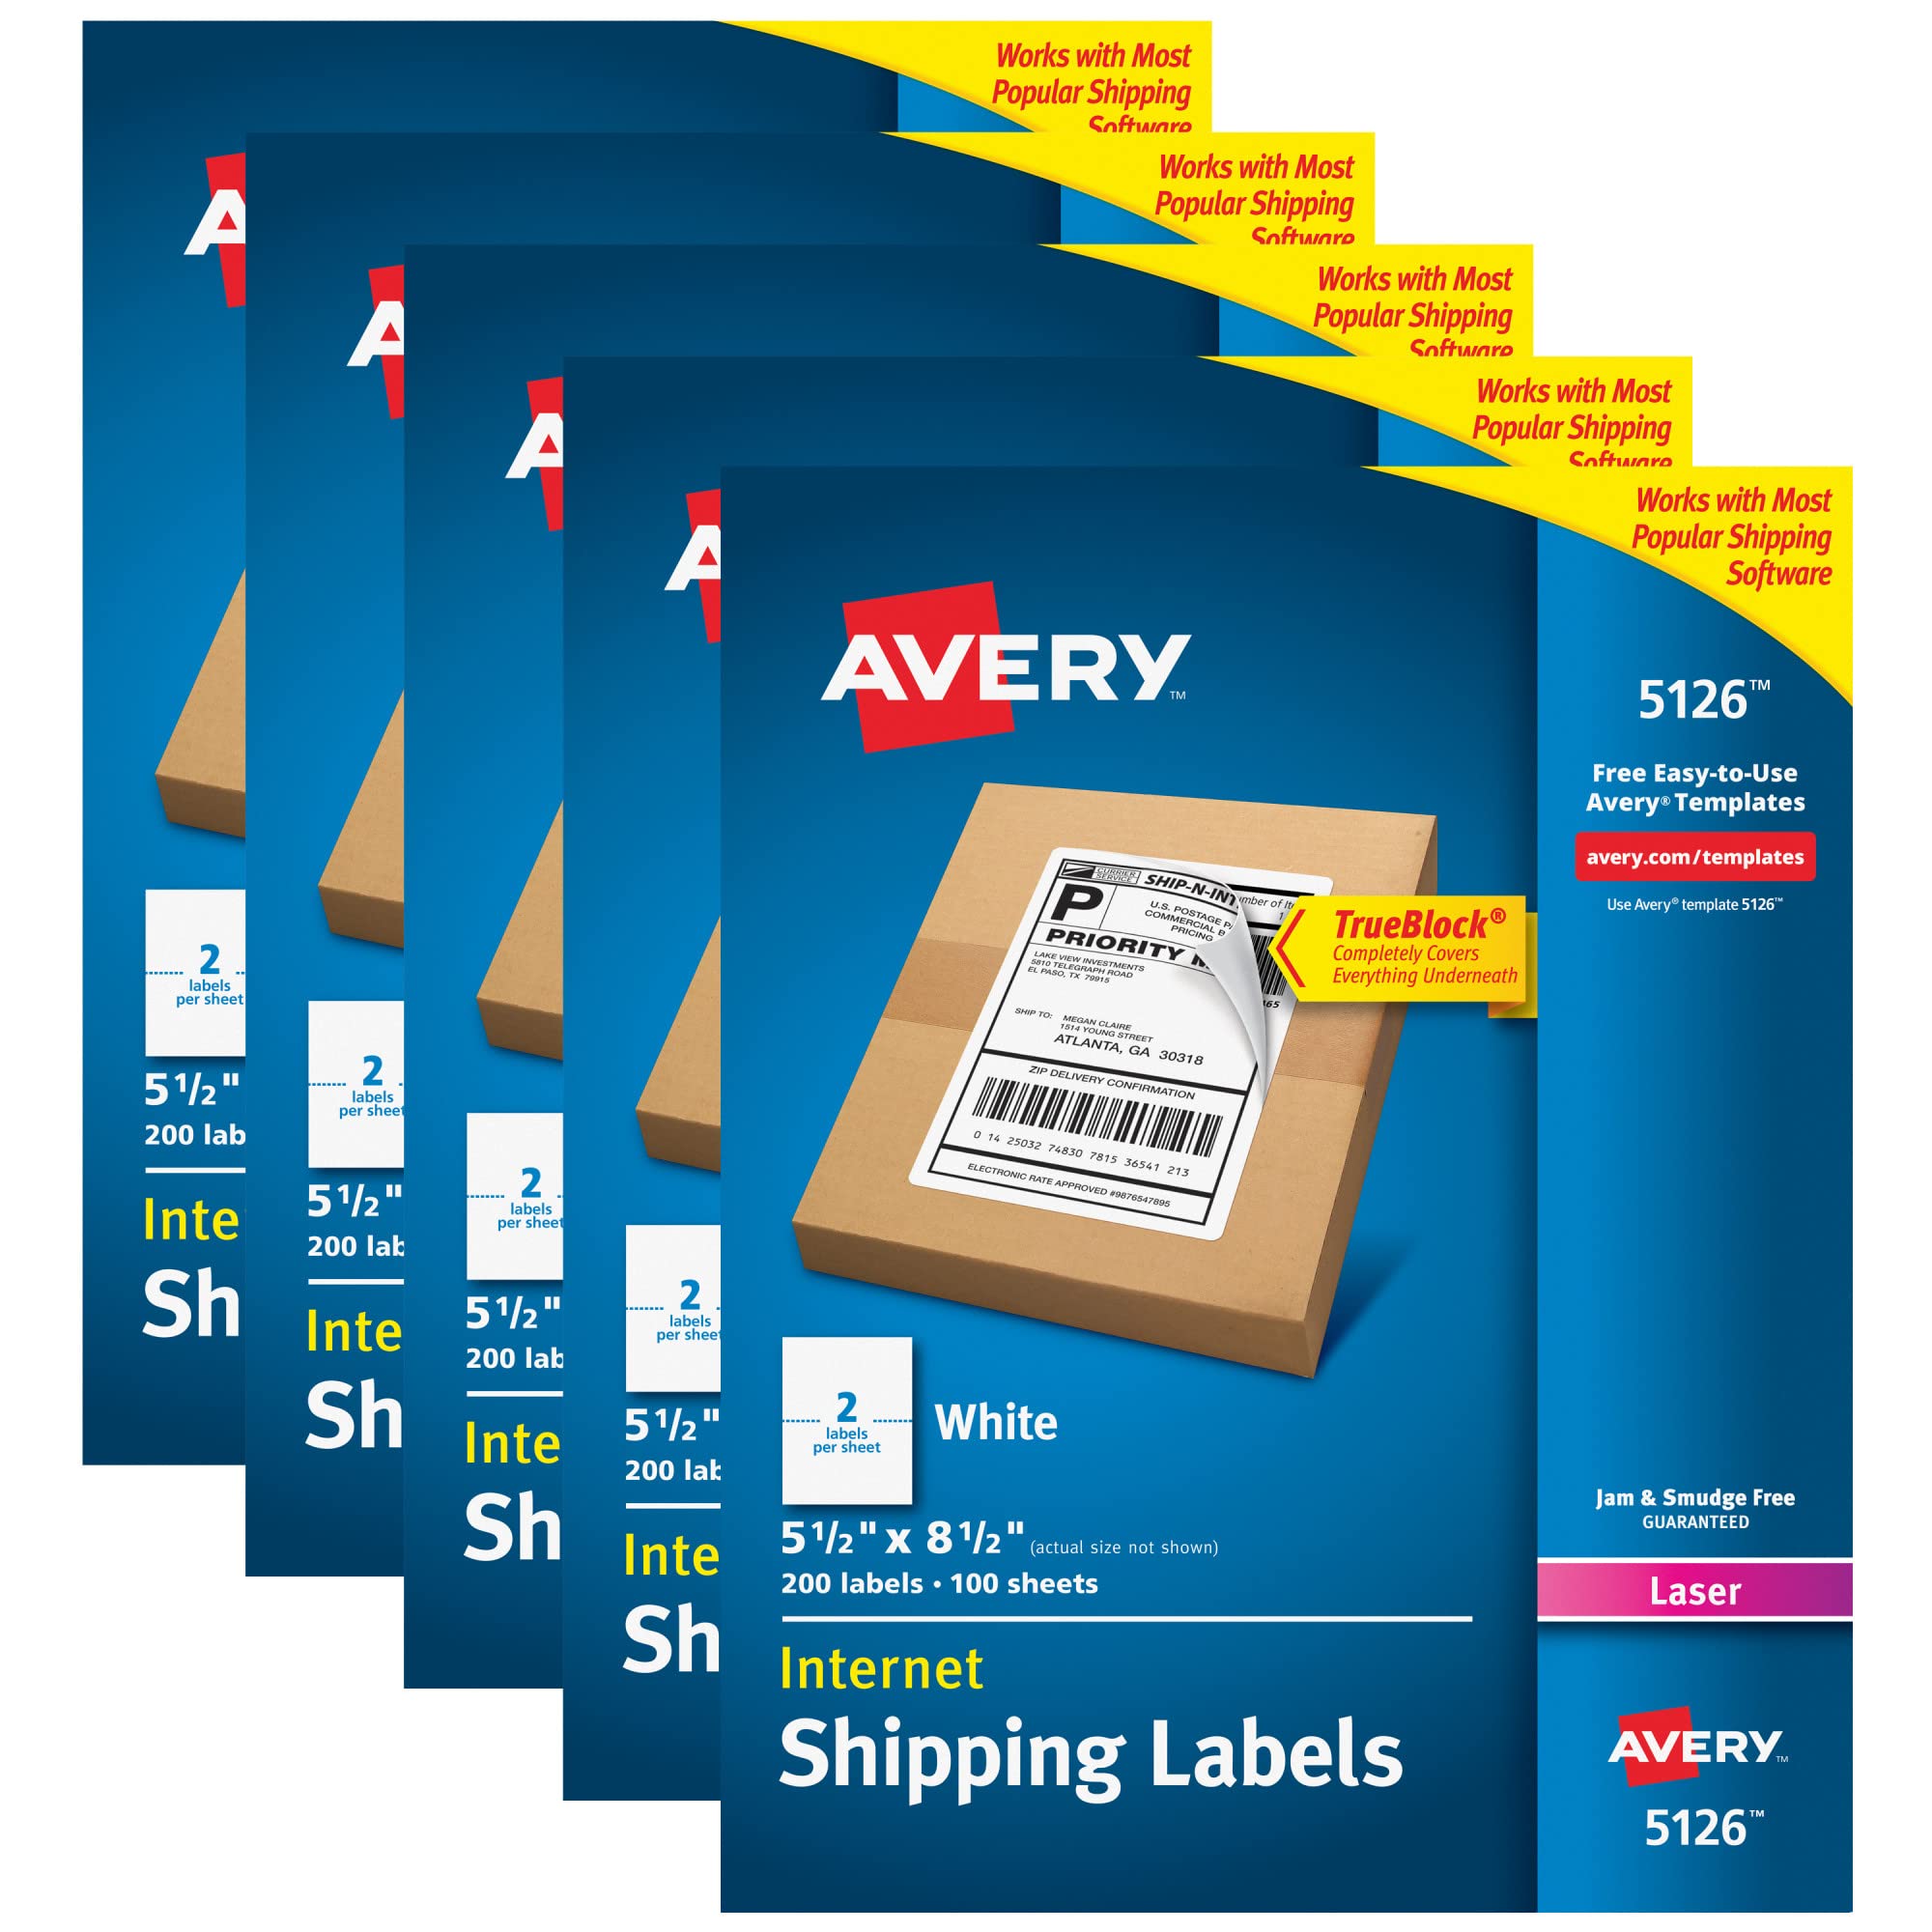 Avery 5126 送货地址标签